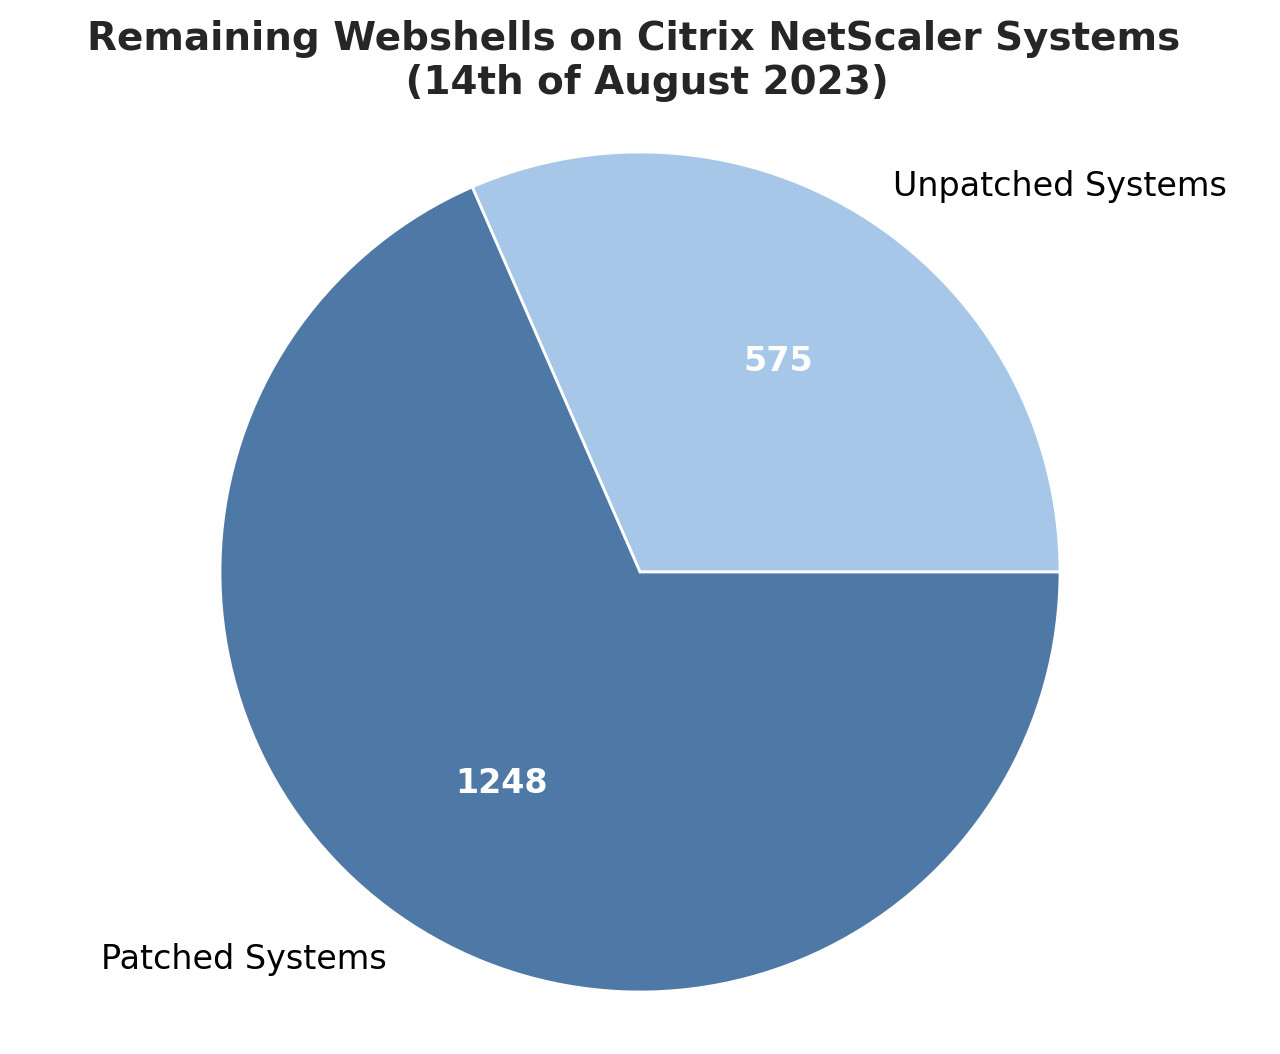 Citrix NetScaler サーバー上の Web シェル - CVE-2023-3519 のパッチ適用済みおよび未パッチ